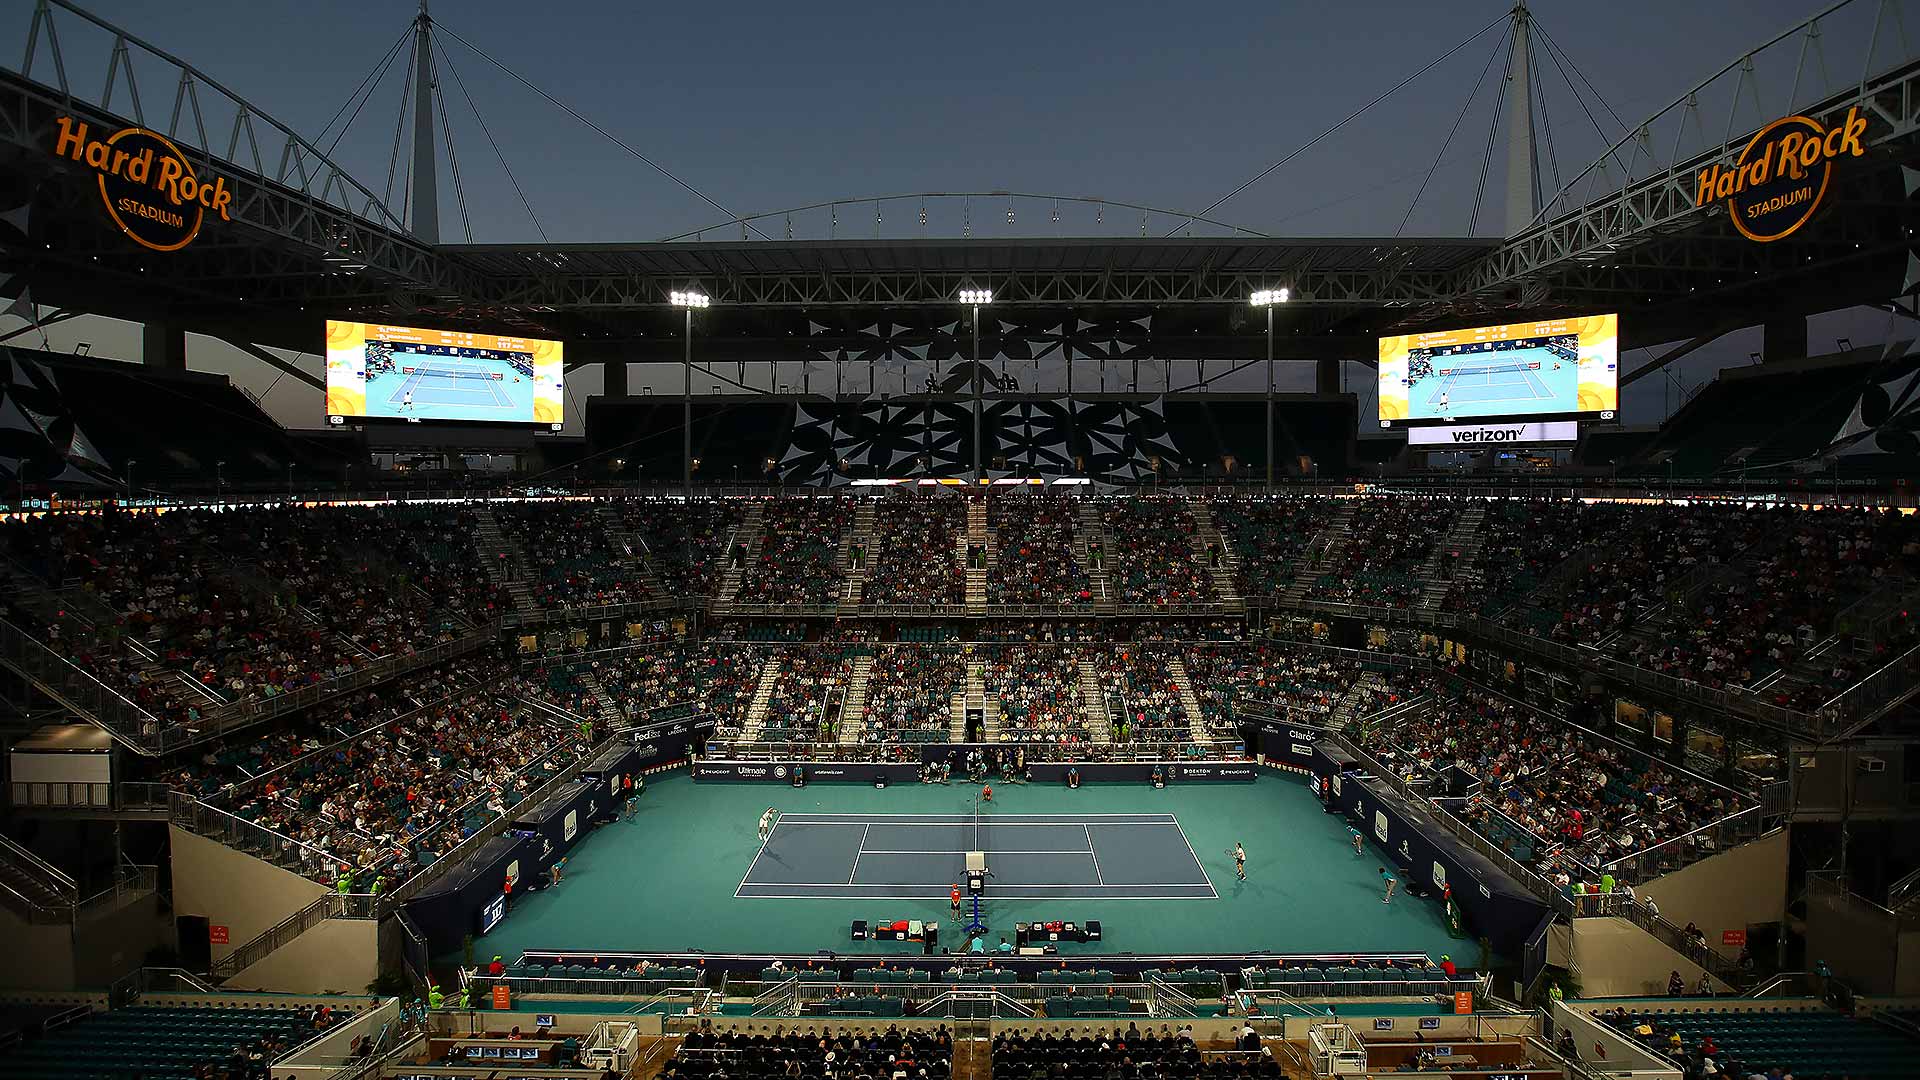 Official Site of Men's Professional Tennis, ATP Tour